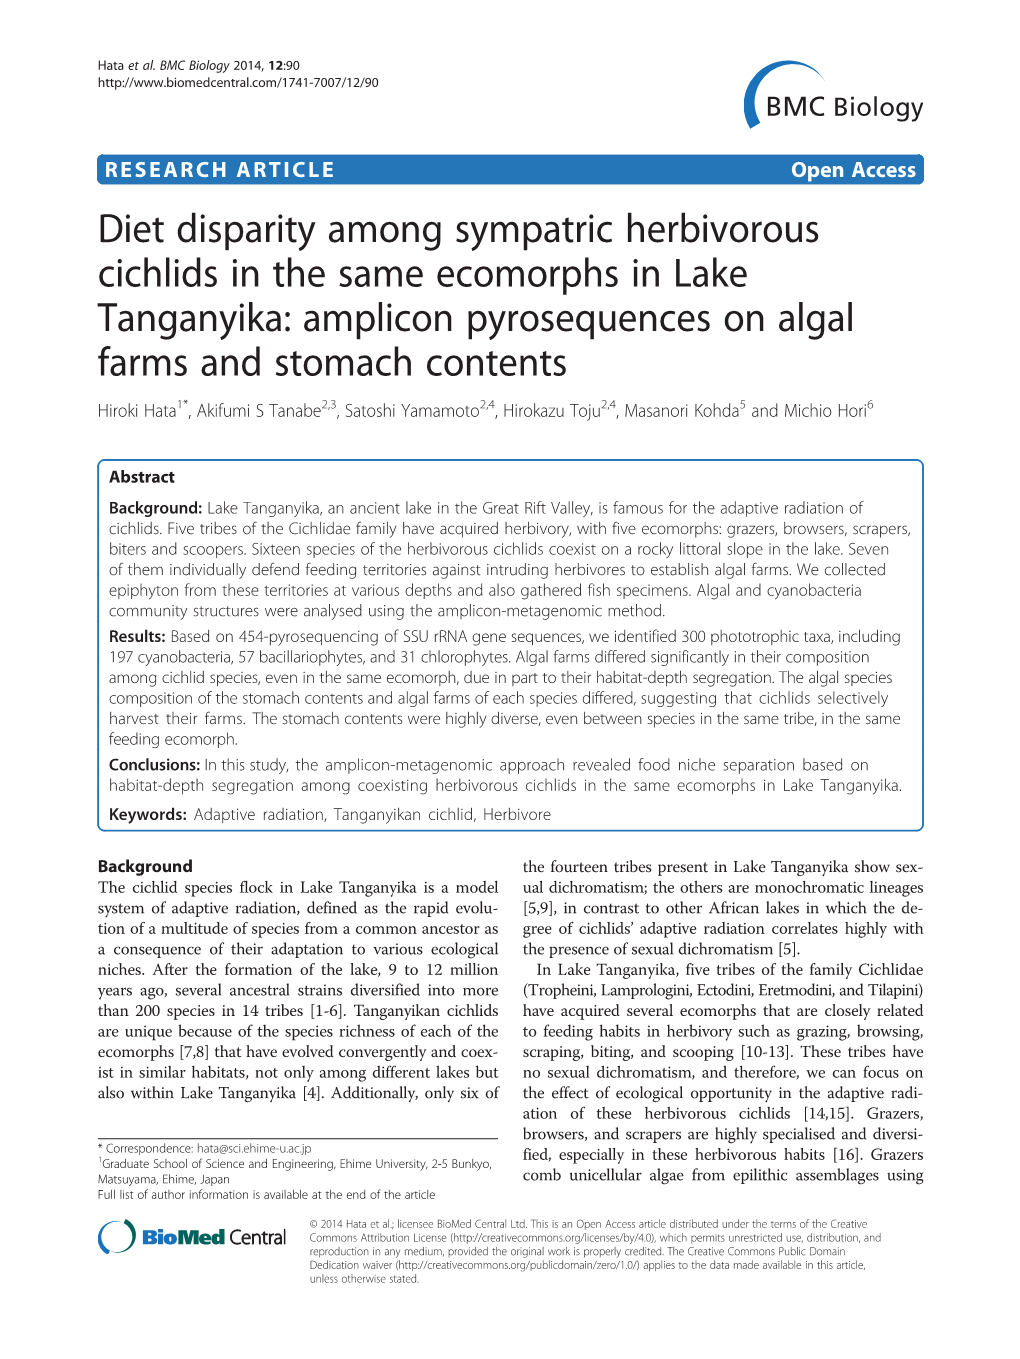 Diet Disparity Among Sympatric Herbivorous Cichlids in the Same